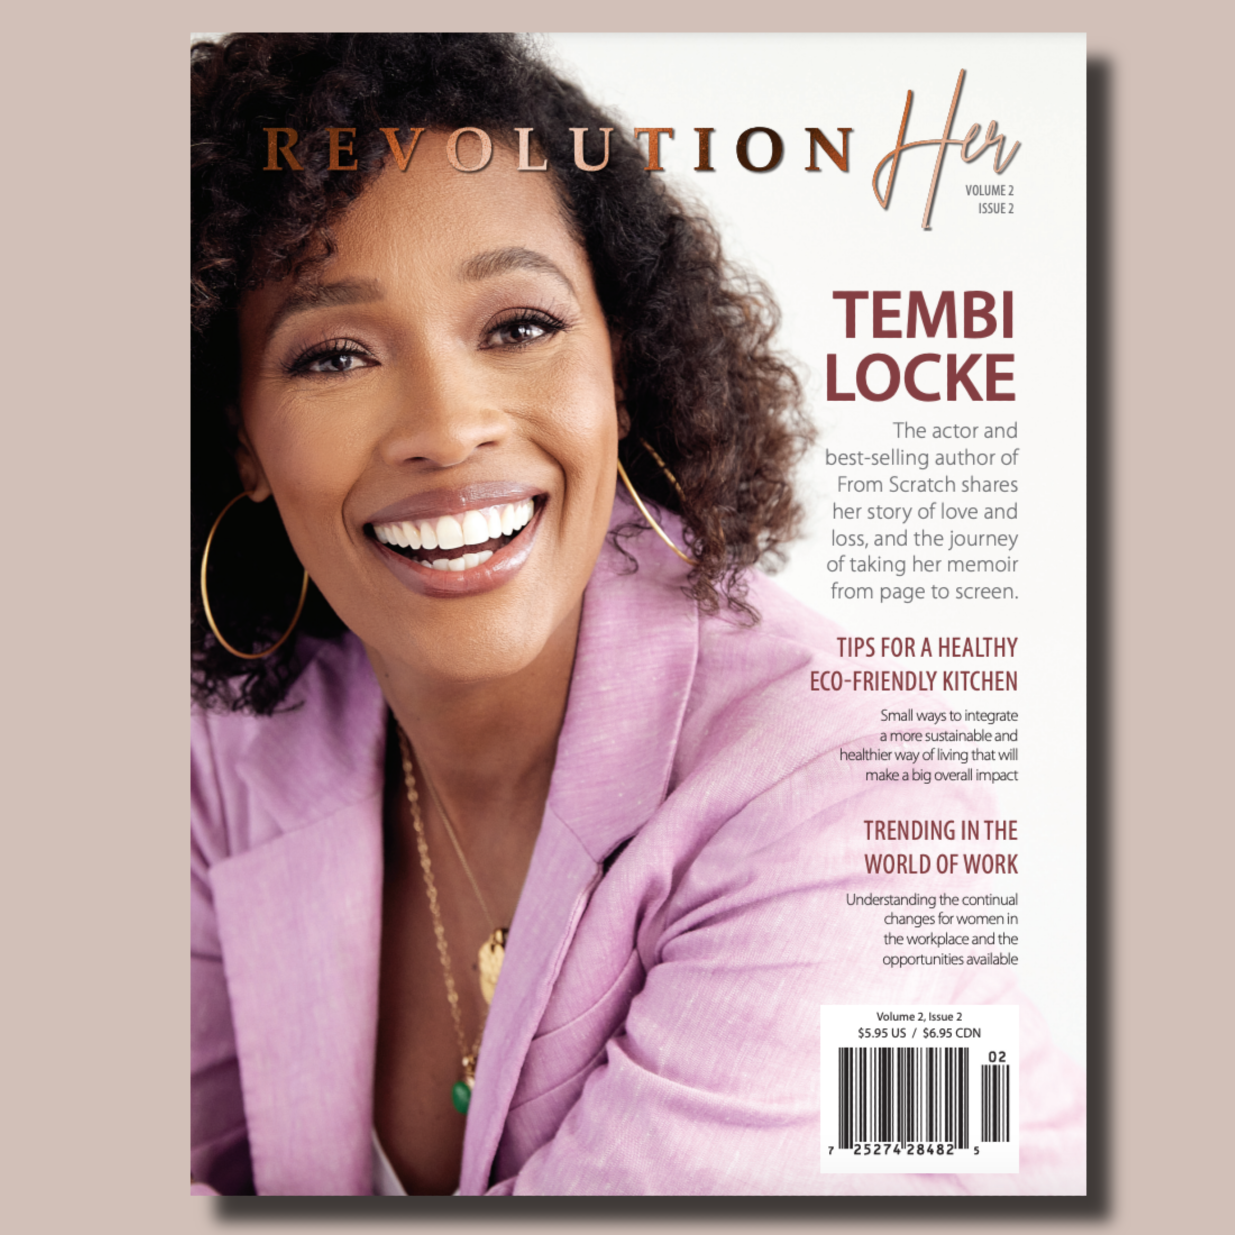 RevolutionHer™ Magazine V2.2 featuring Tembi Locke